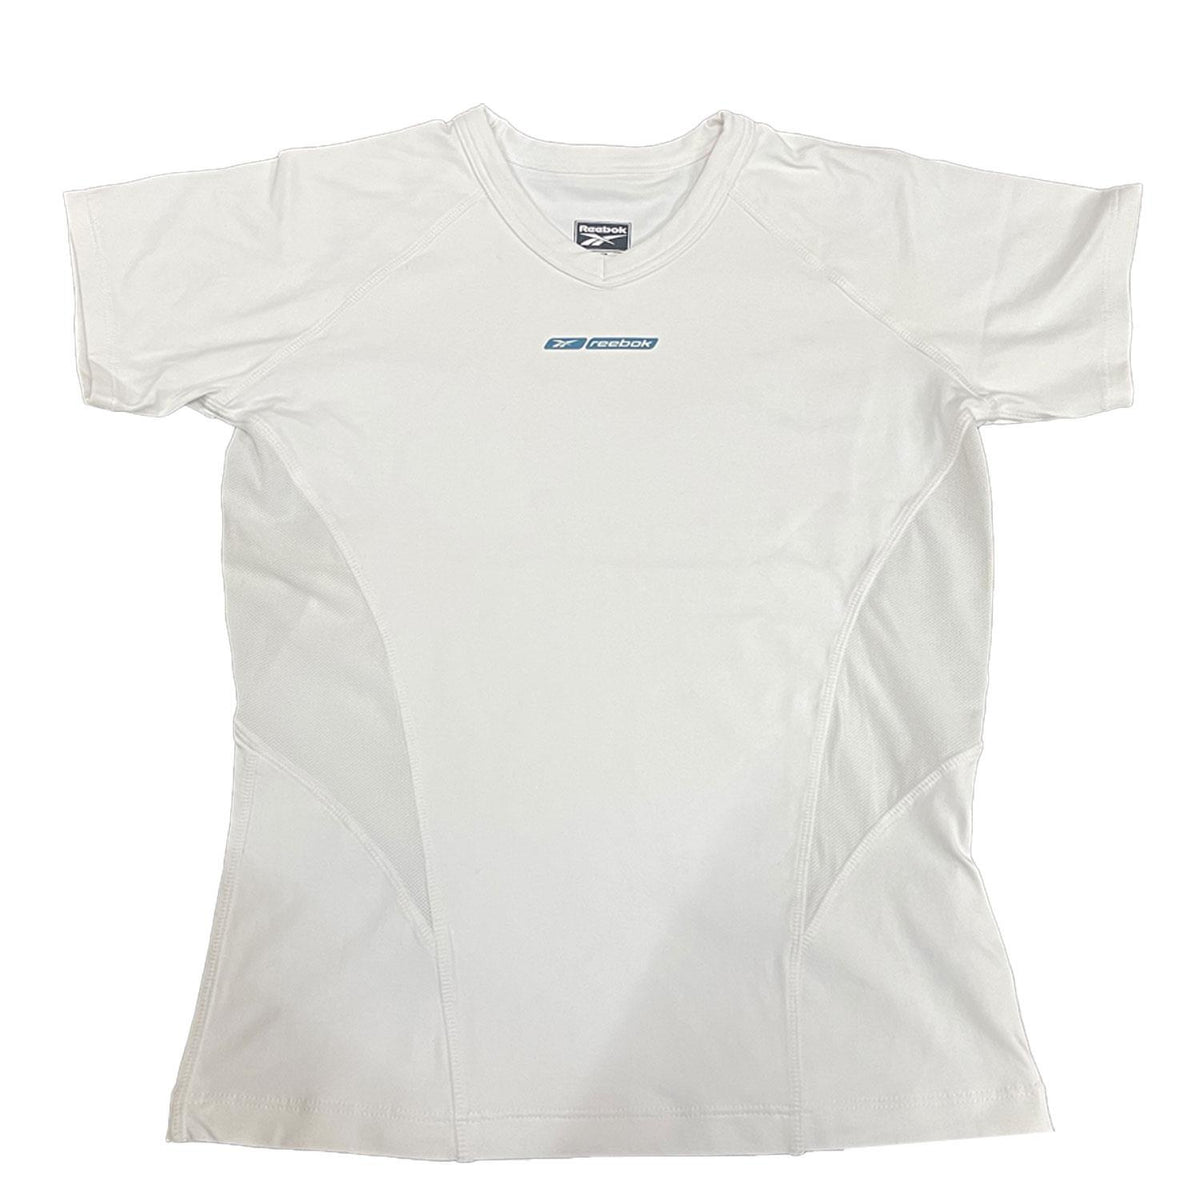 Reebok Womens Athletics Classic T-Shirt - White - UK Size 12